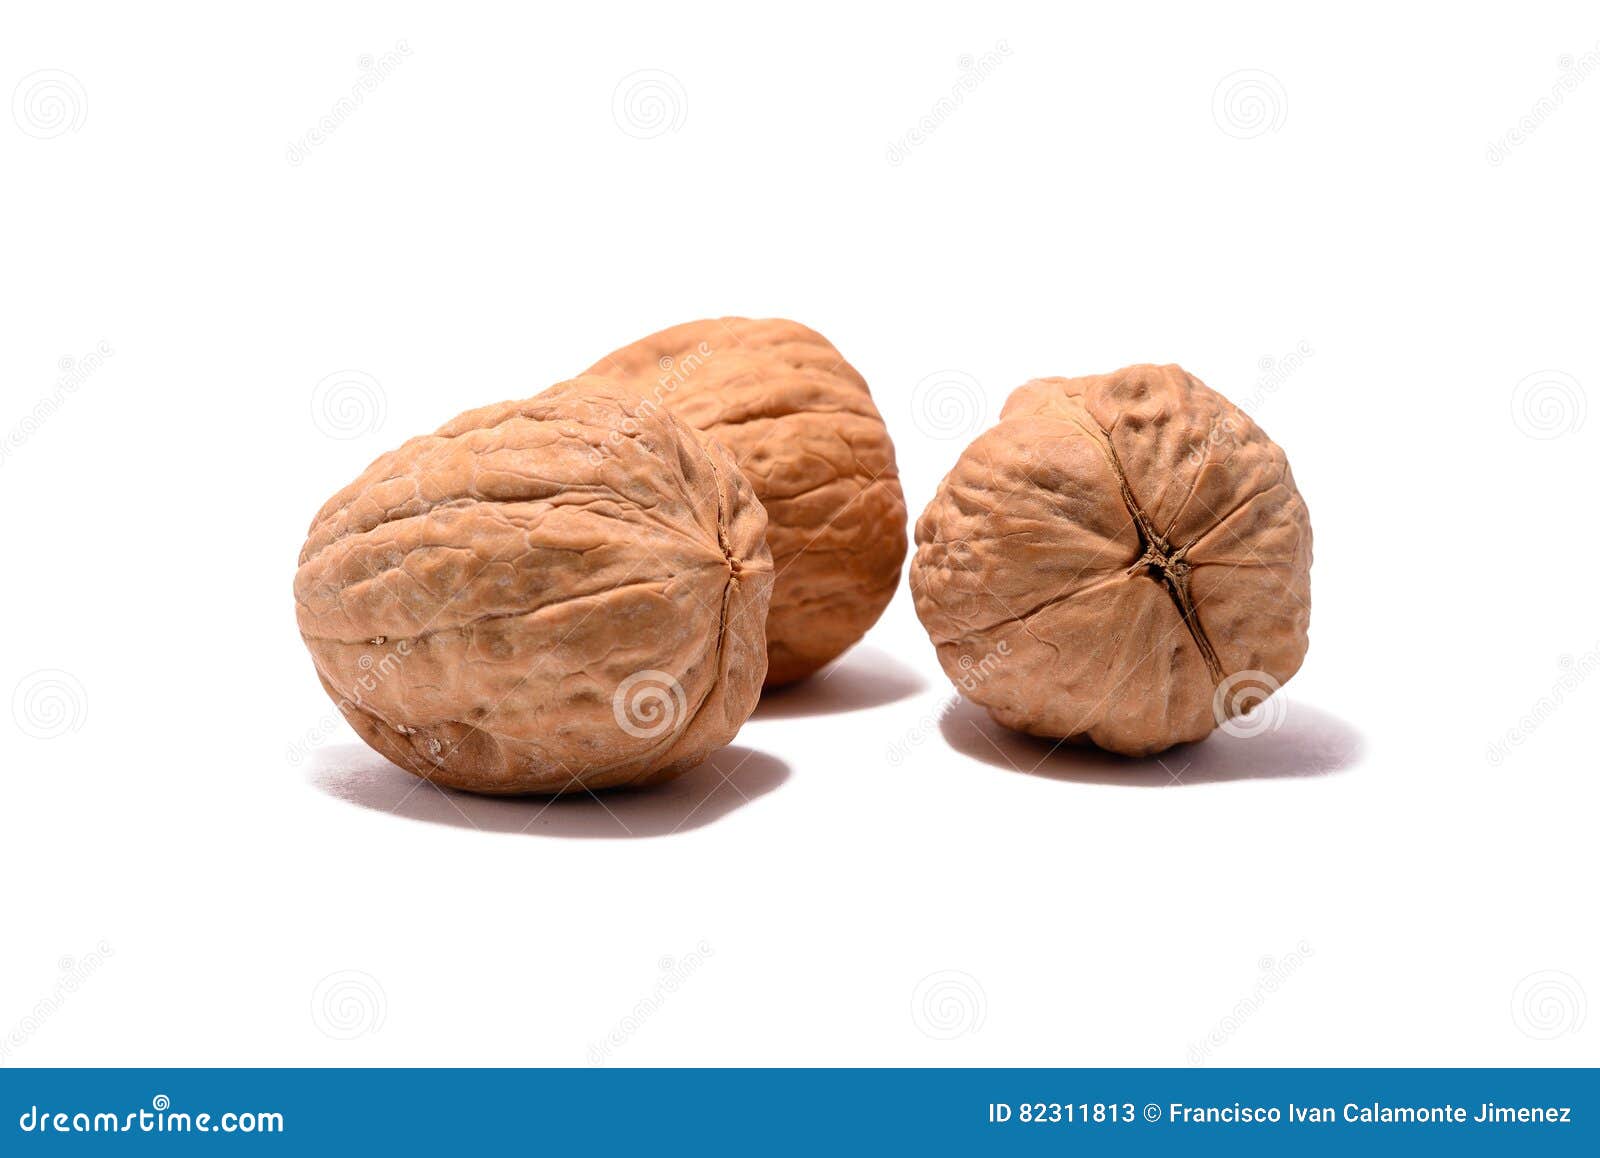 three walnuts with shadow